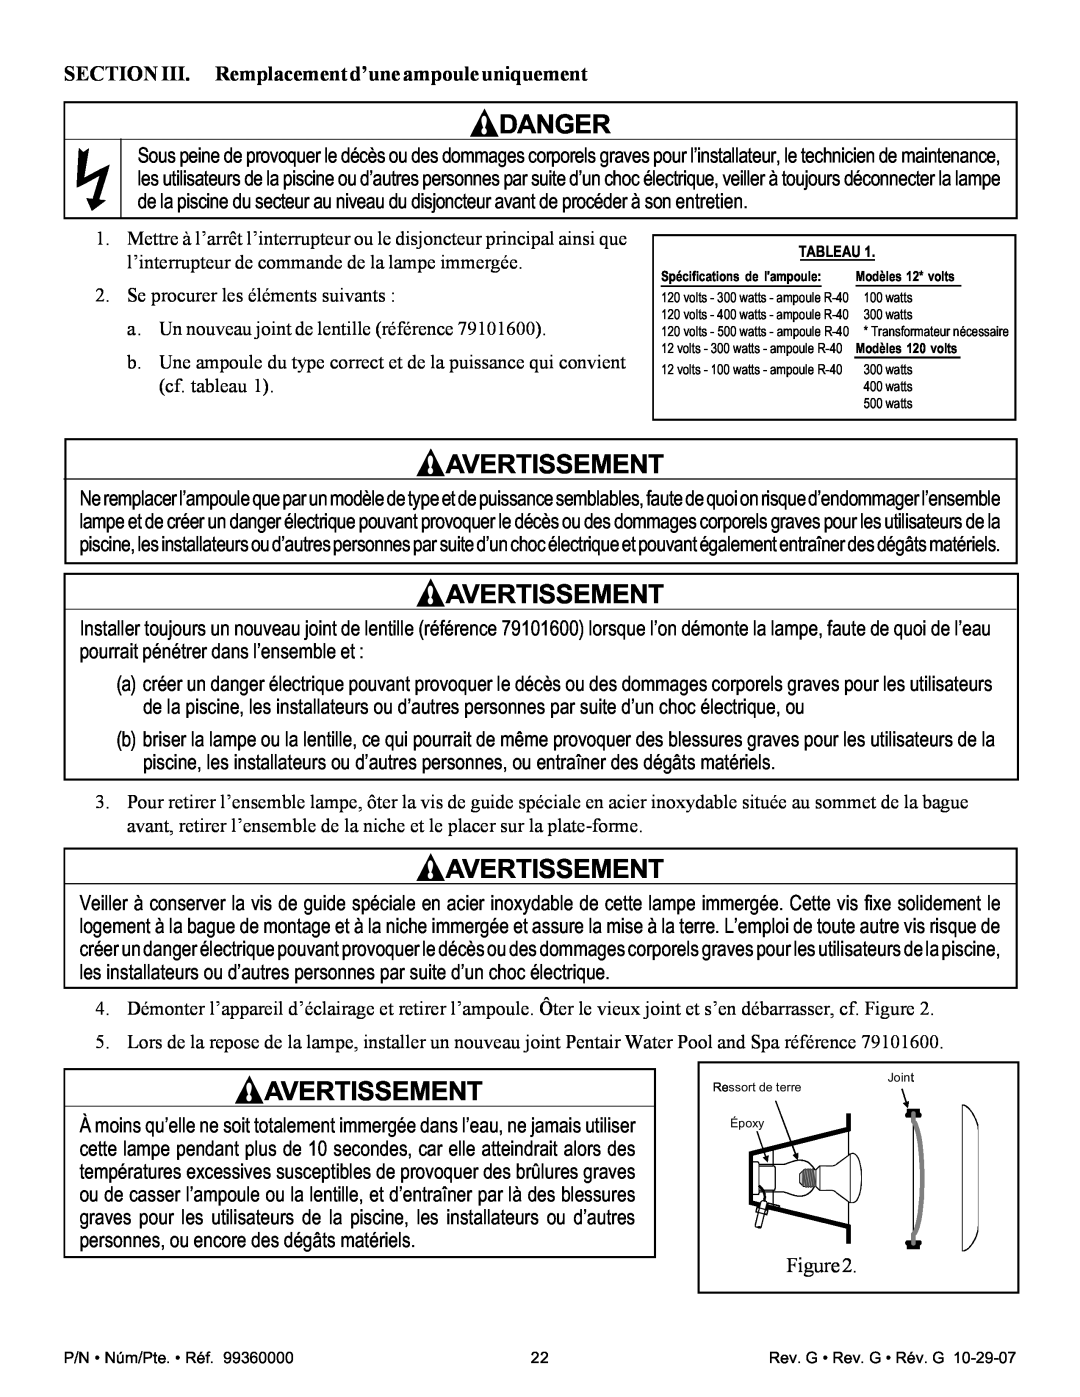 Pentair Amerlite important safety instructions SECTION III. Remplacementd’une ampouleuniquement, Danger, Avertissement 